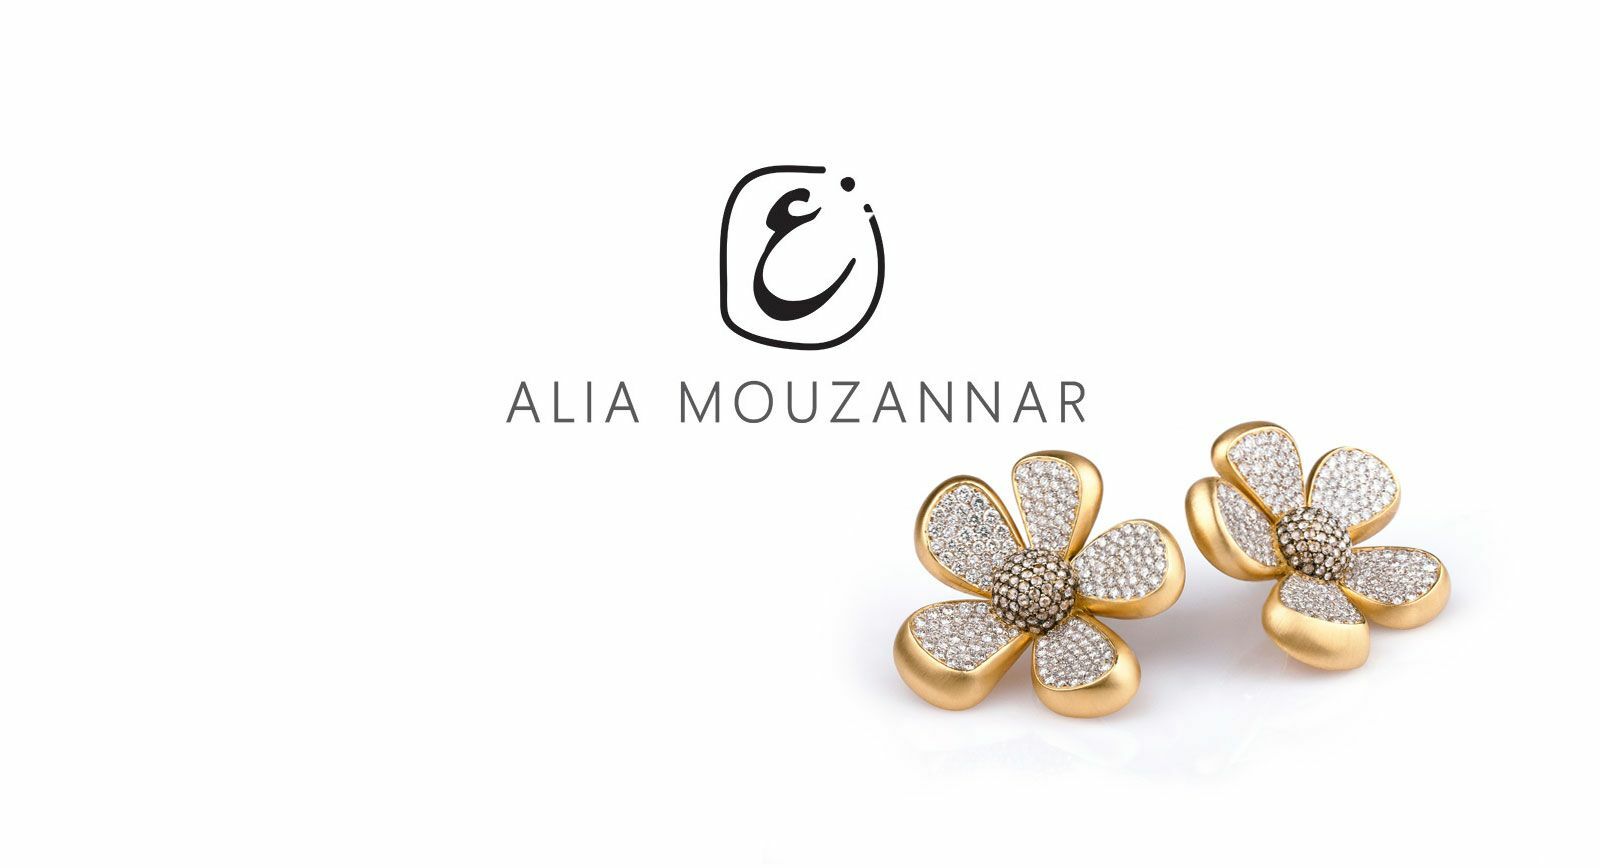 Alia Mouzannar’s world of jewellery transformations